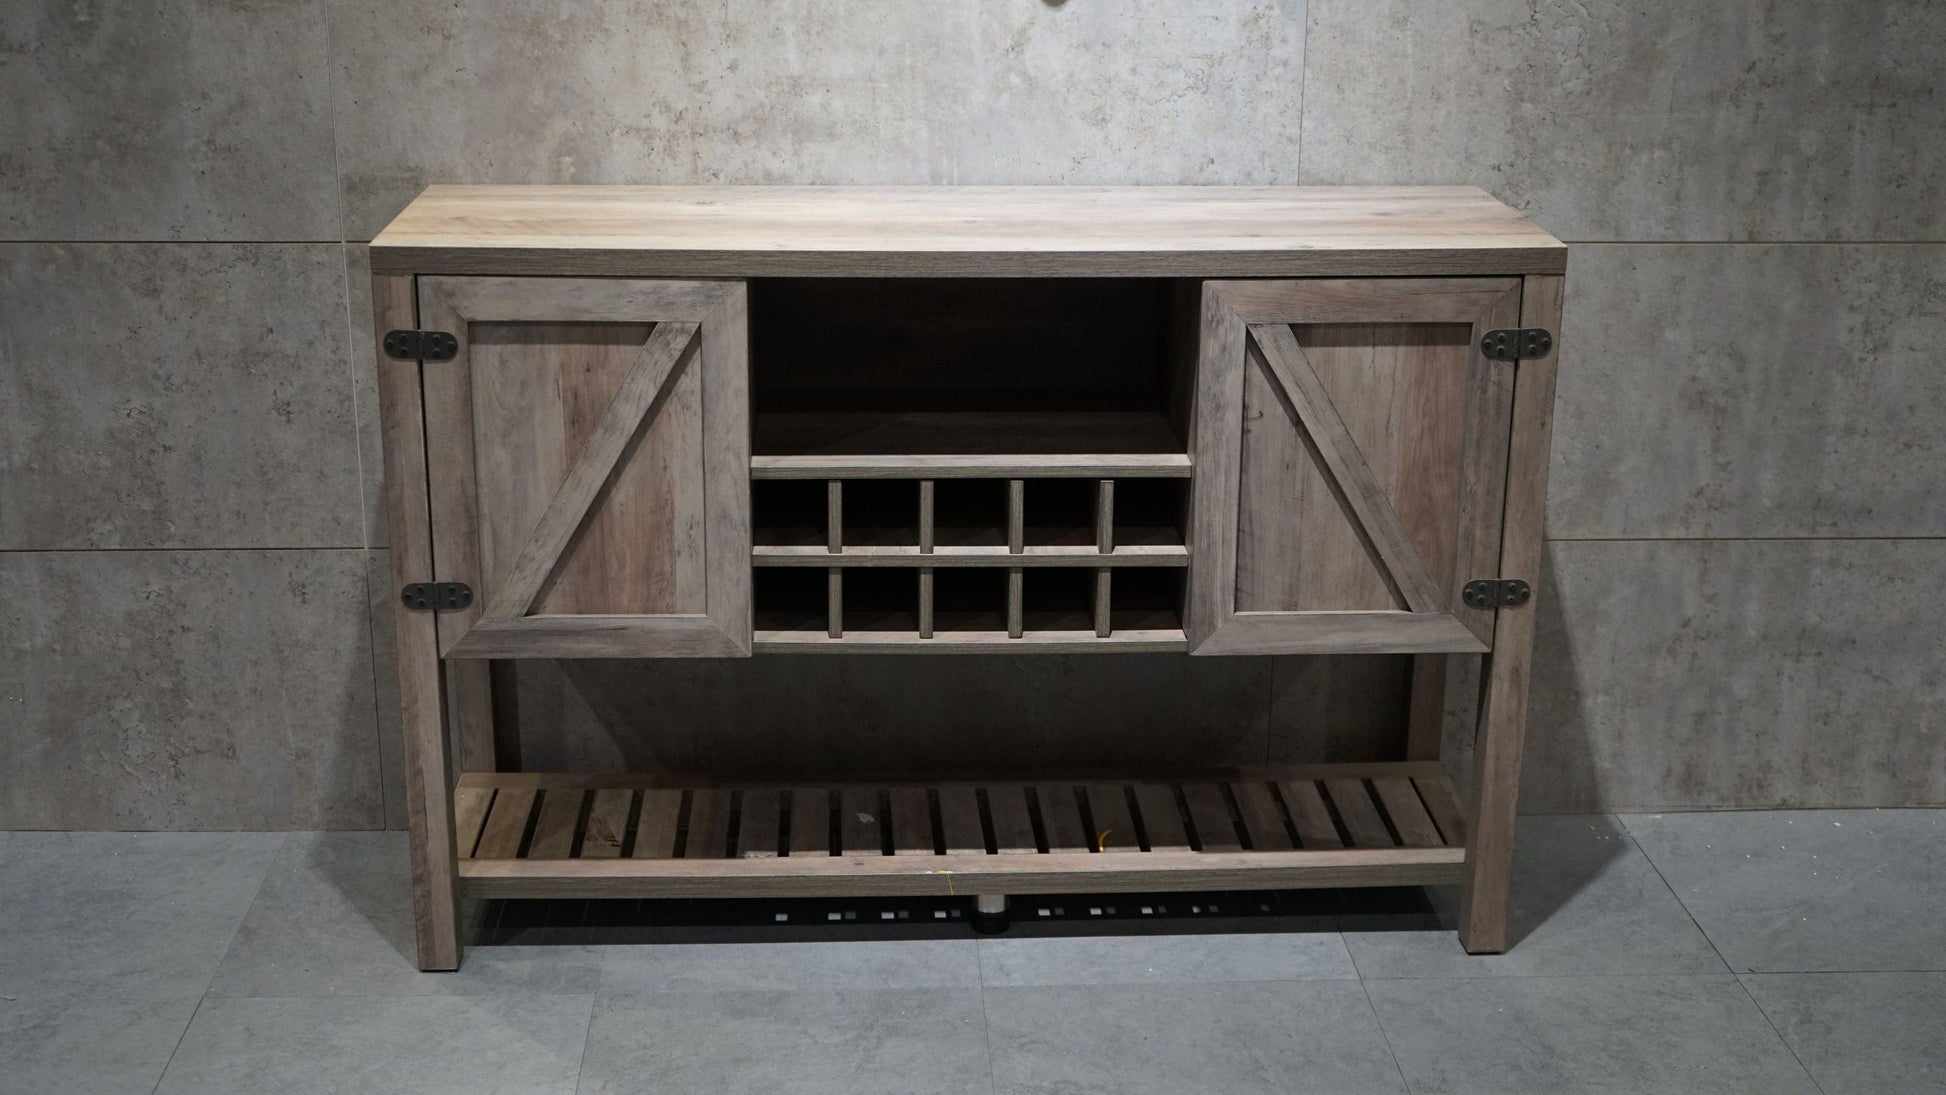 1st Choice Furniture Direct Wine Rack 1st Choice Versatile 52" Cabinet with Wine Racks in Grey Walnut Finish